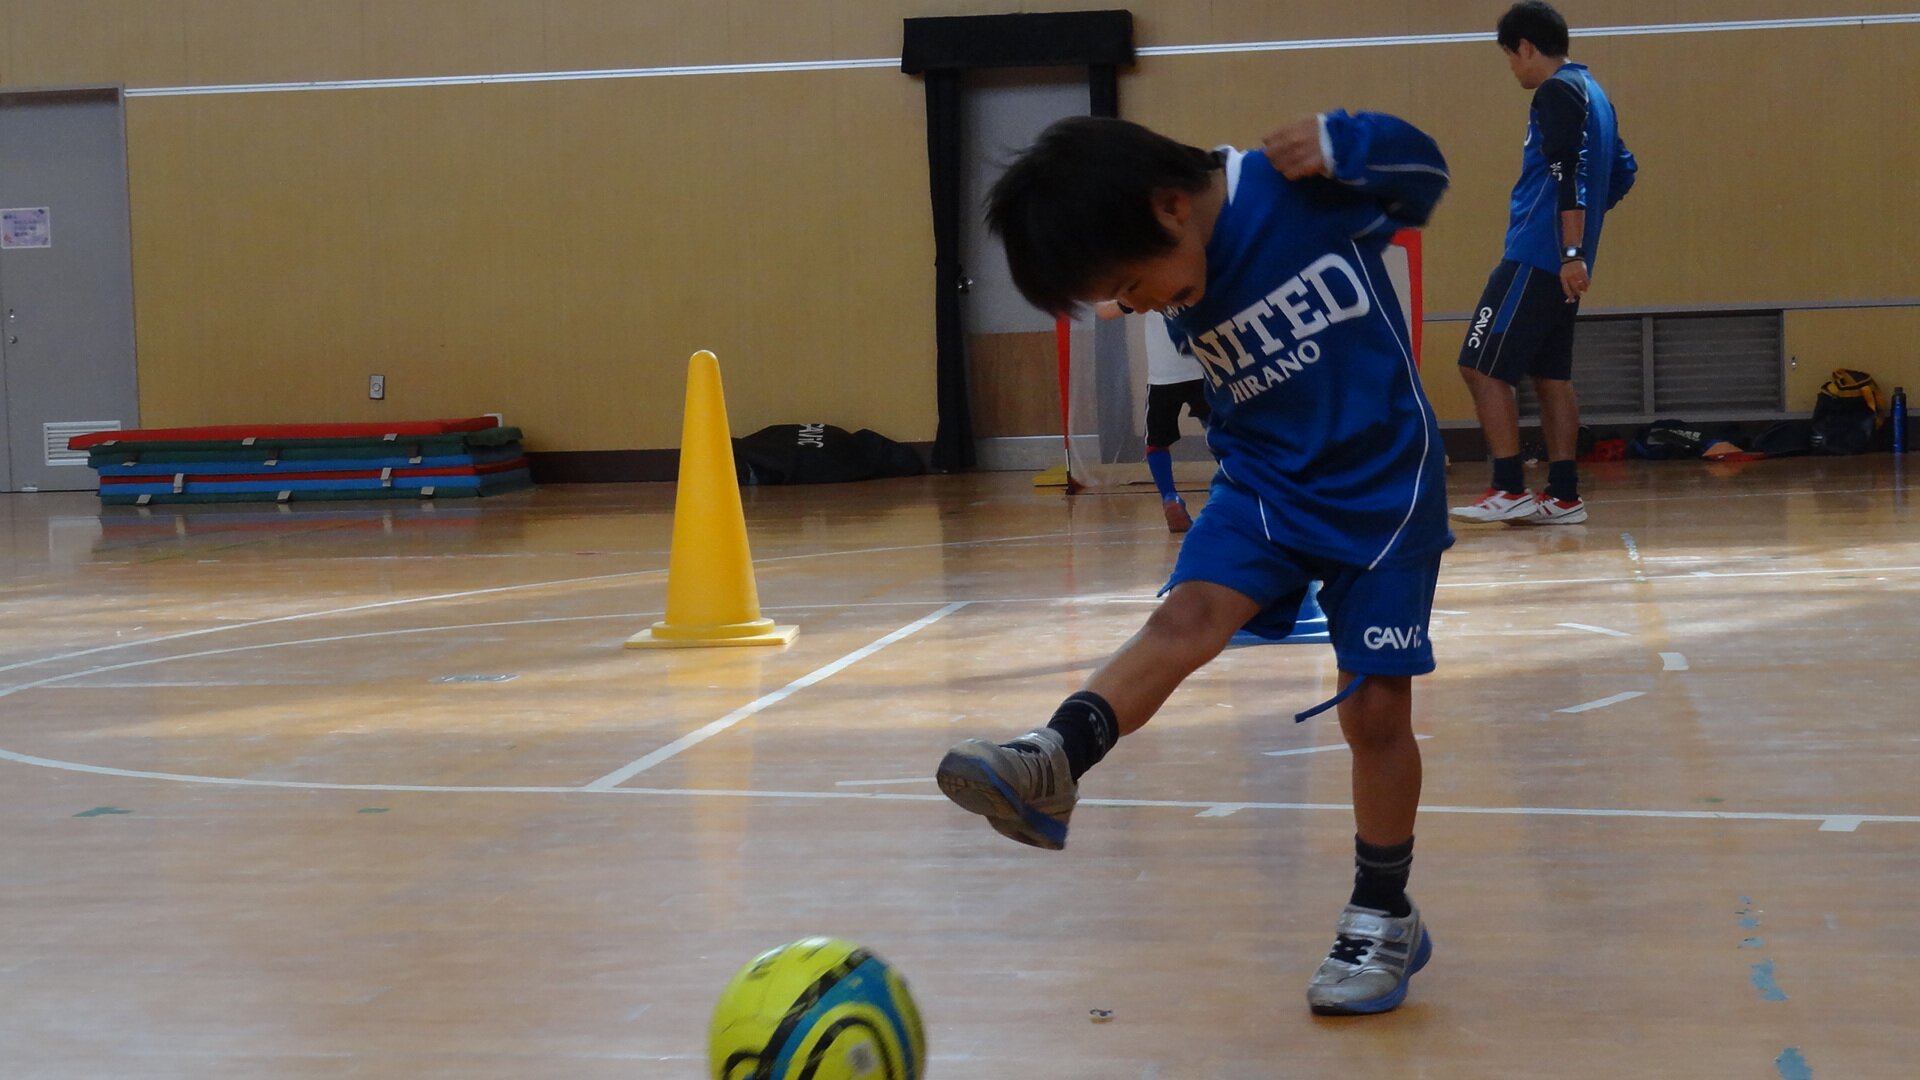 NPO法人ユナイテッド平野スポーツクラブは、大阪市平野区を中心に少年サッカーや高齢者向けのグランドゴルフや太極拳などの教室事業を地域で開催すると共に大阪市下の中学生や小学生に向けに大会を開催する総合型地域スポーツクラブです。